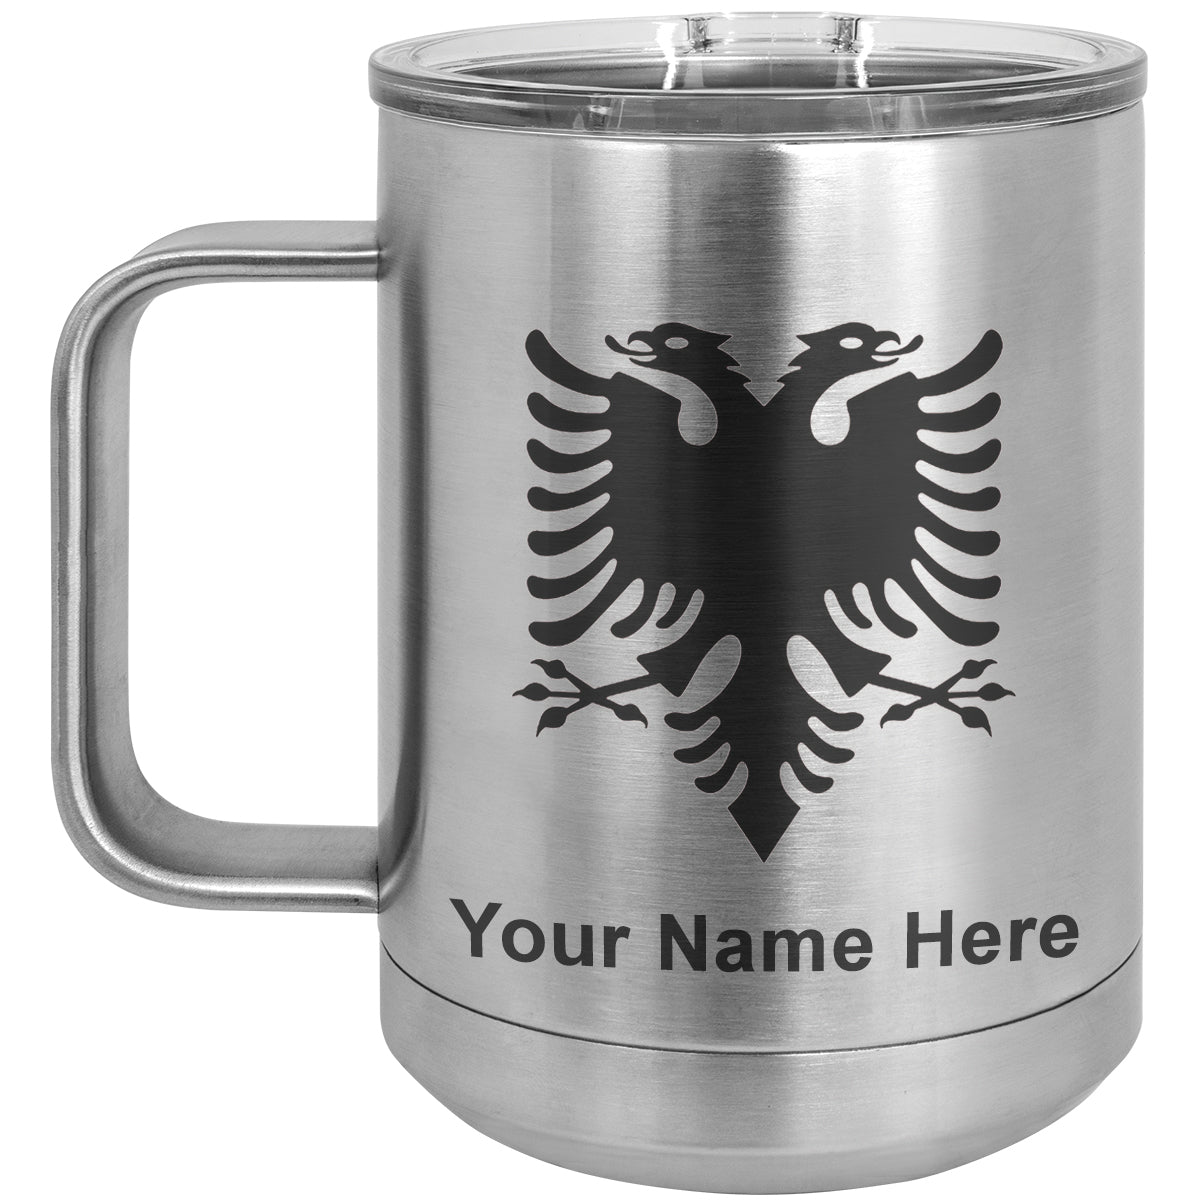 15oz Vacuum Insulated Coffee Mug, Flag of Albania, Personalized Engraving Included